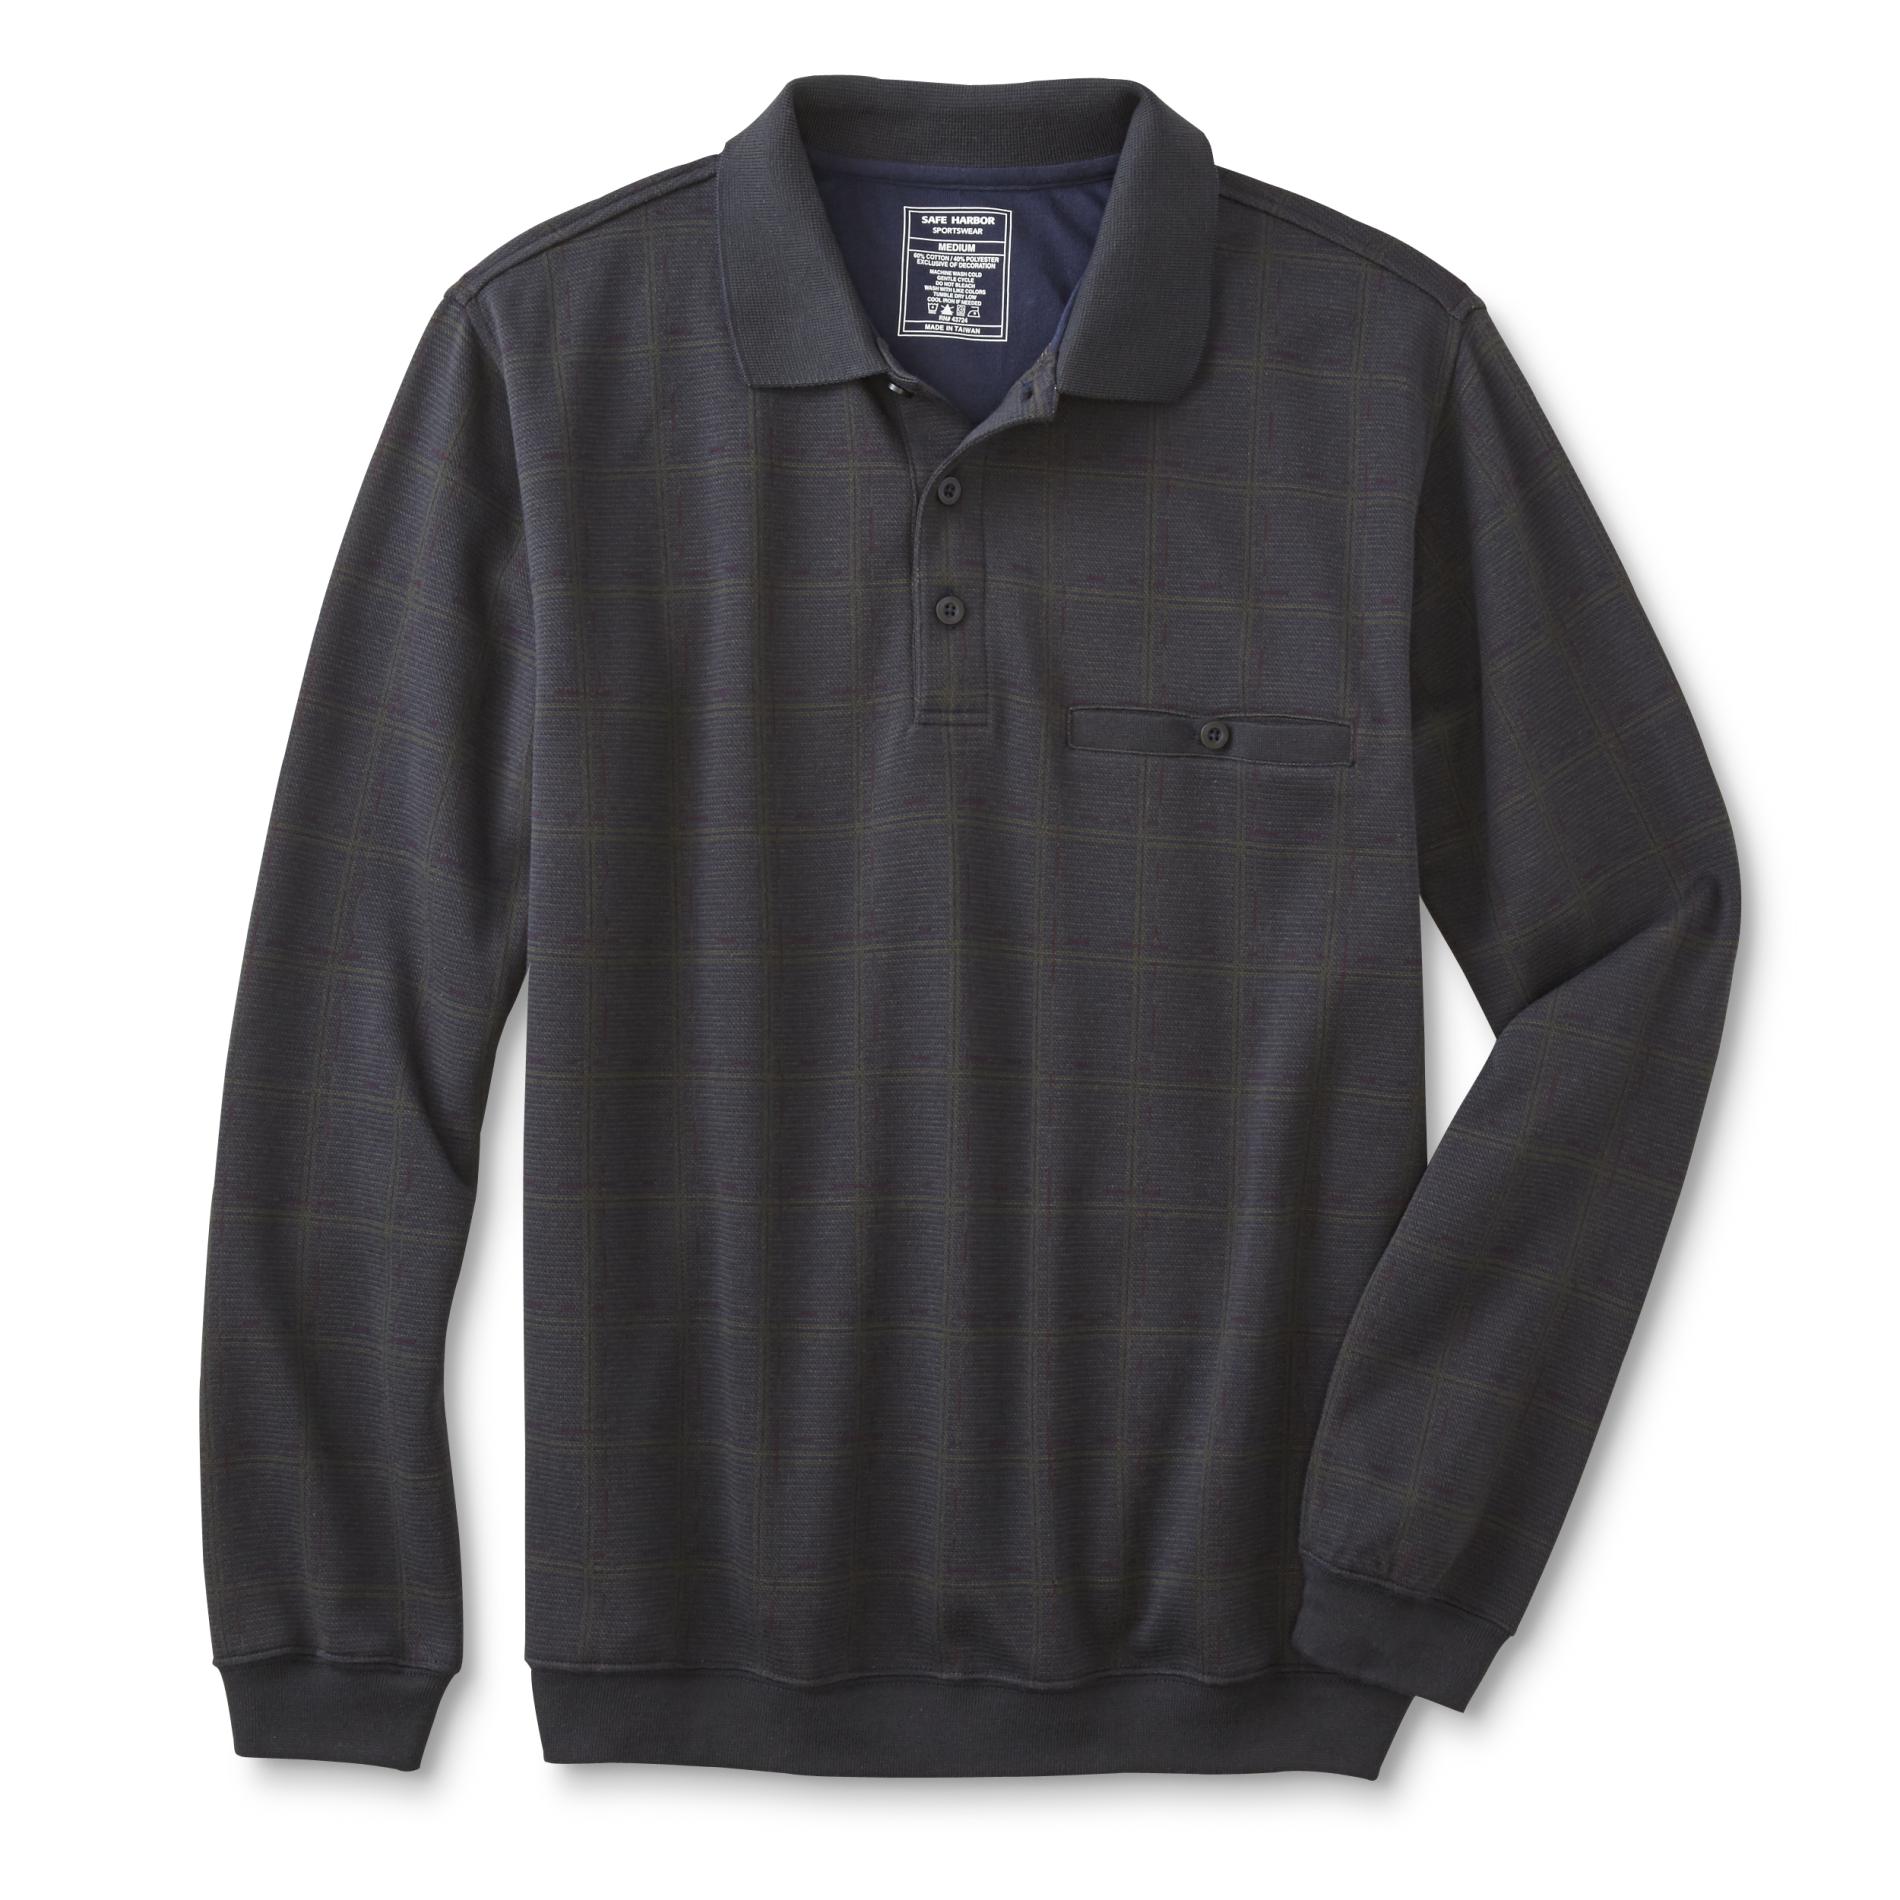 David Taylor Collection Men's Long-Sleeve Polo Shirt - Windowpane